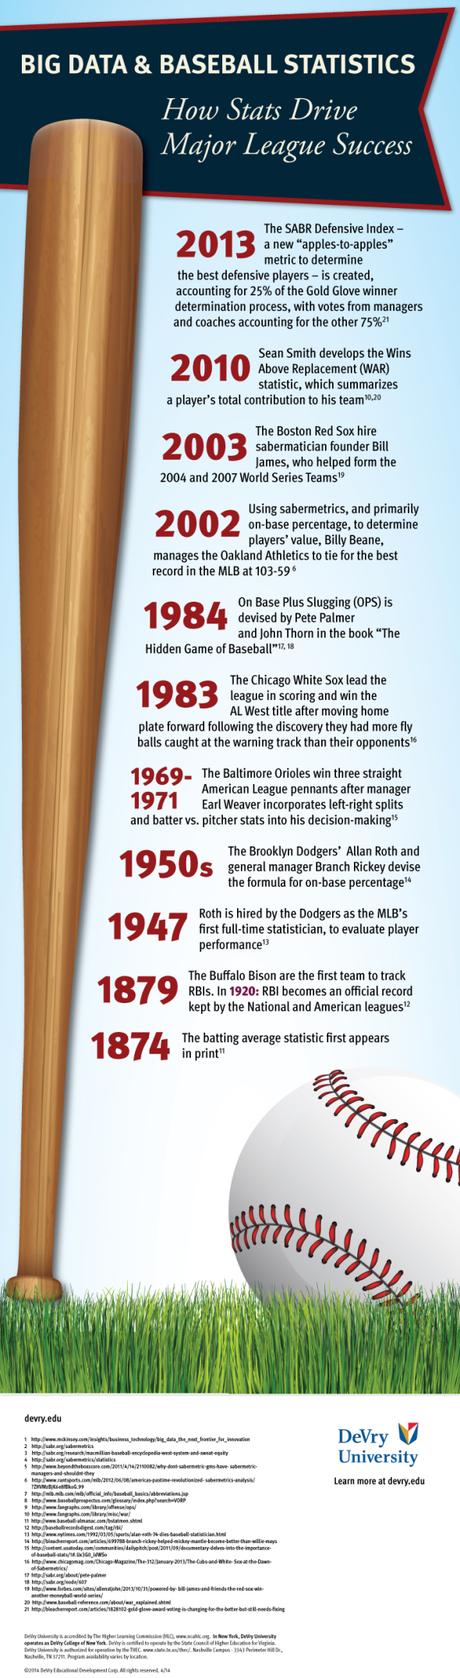 Infographic: Big Data & Baseball Statistics